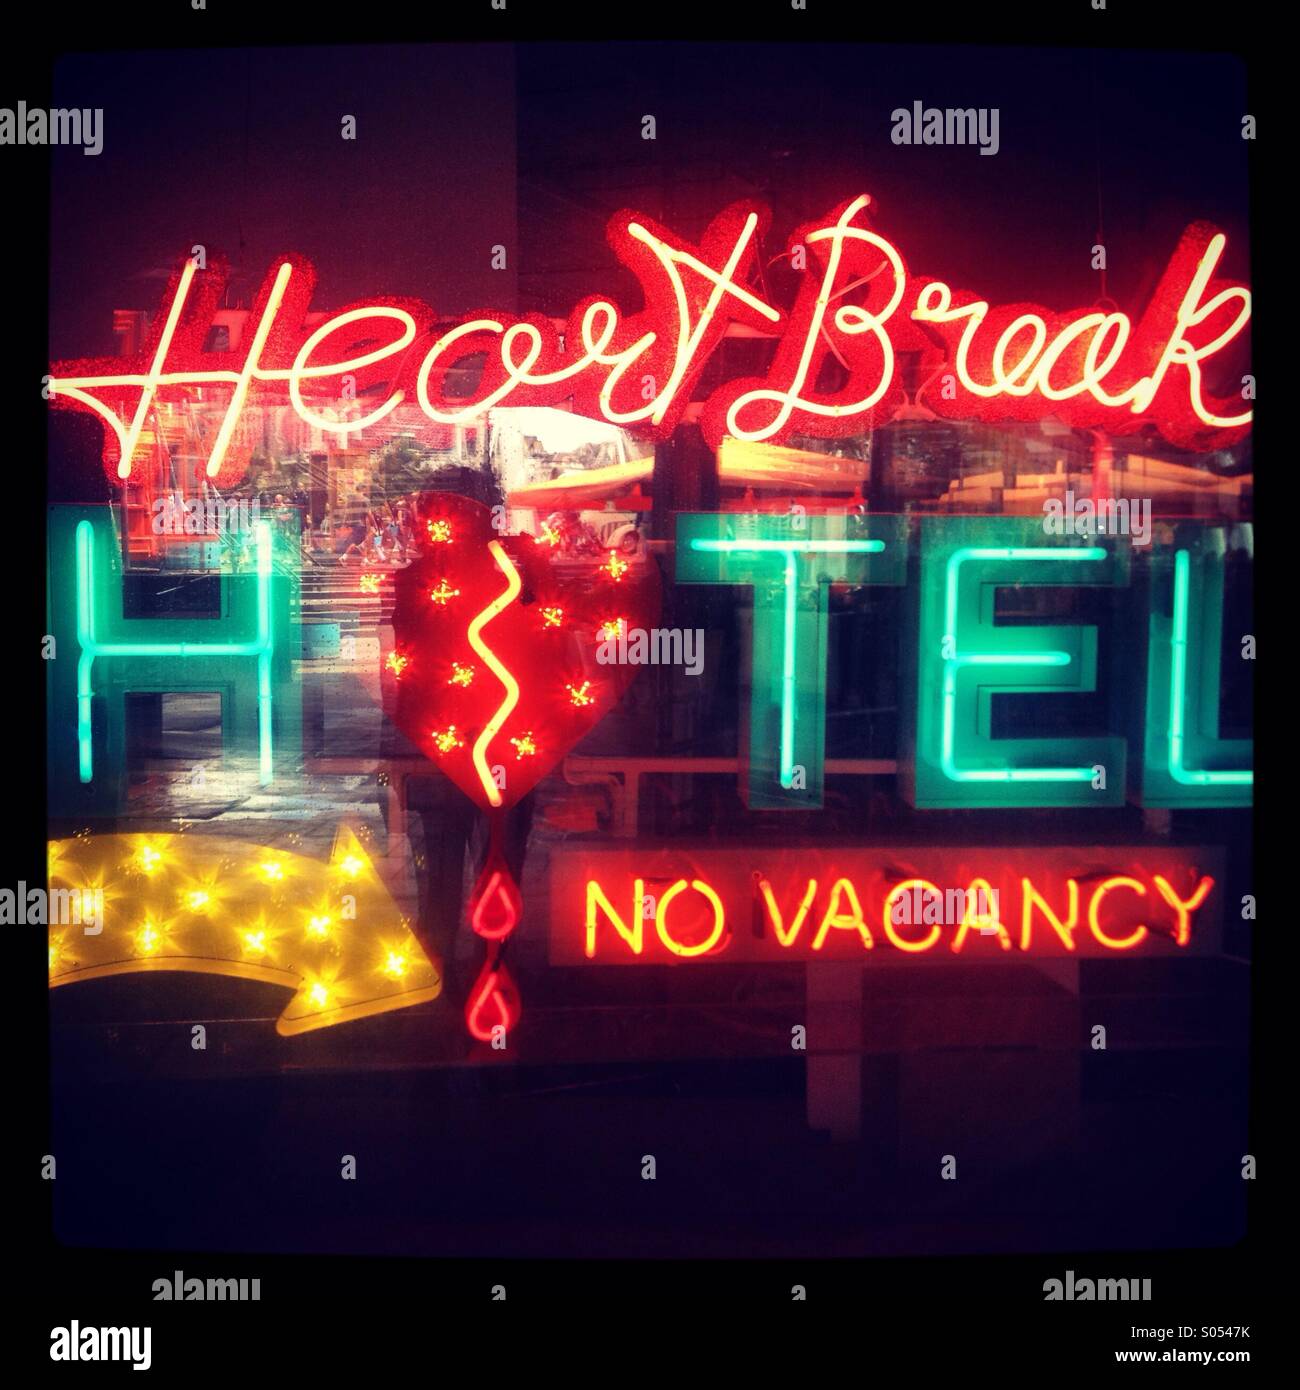 Heartbreak hotel Stock Photo